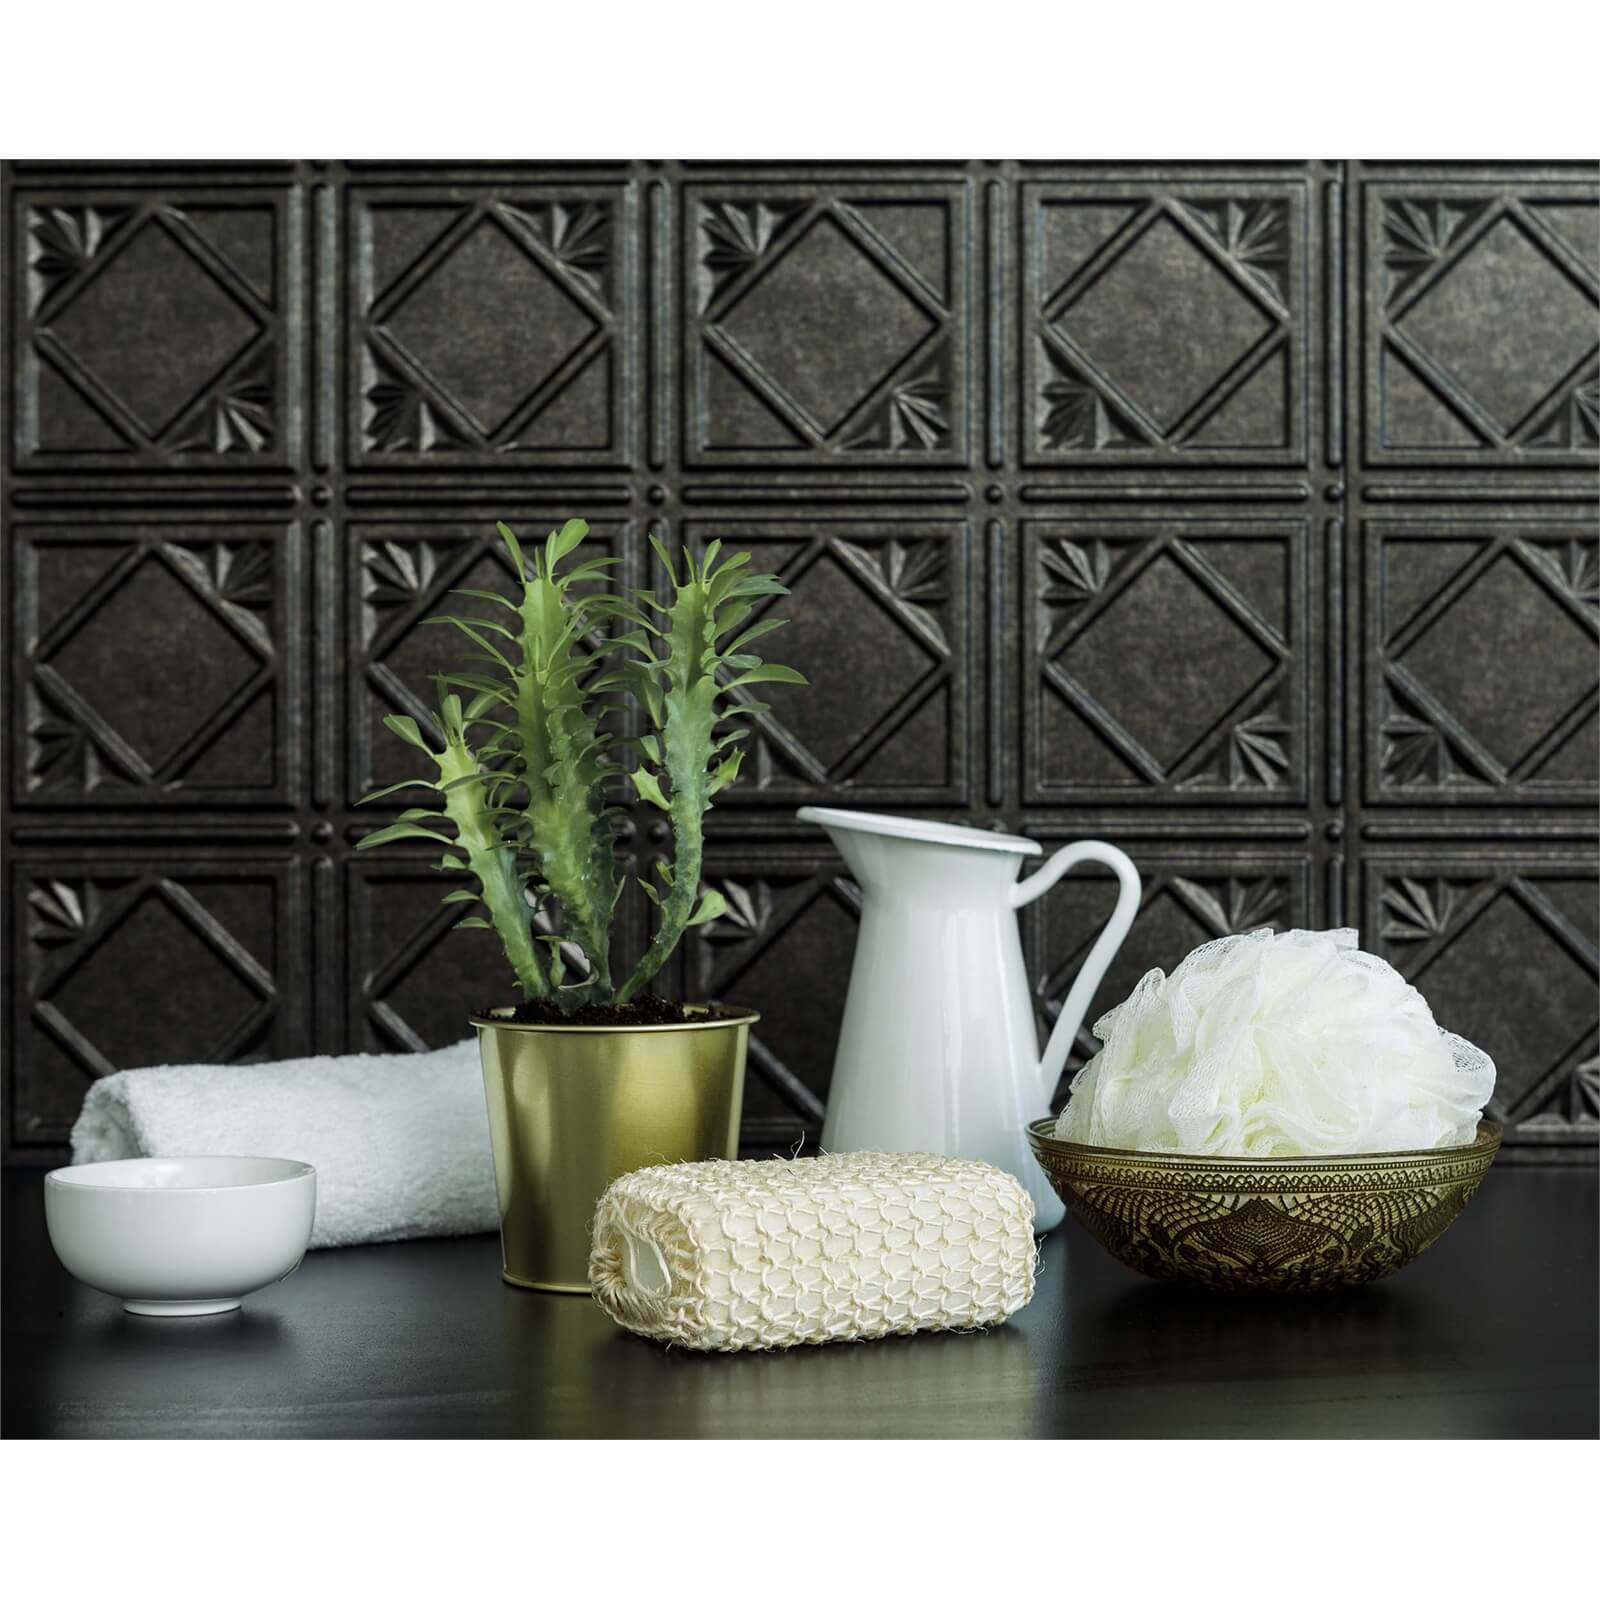 Photo of Innovera Decor 3d Design Wall Tile - Kitchen Splashback Cladding Panels -art Nouveau - Smoked Pewter- Set Of 6-